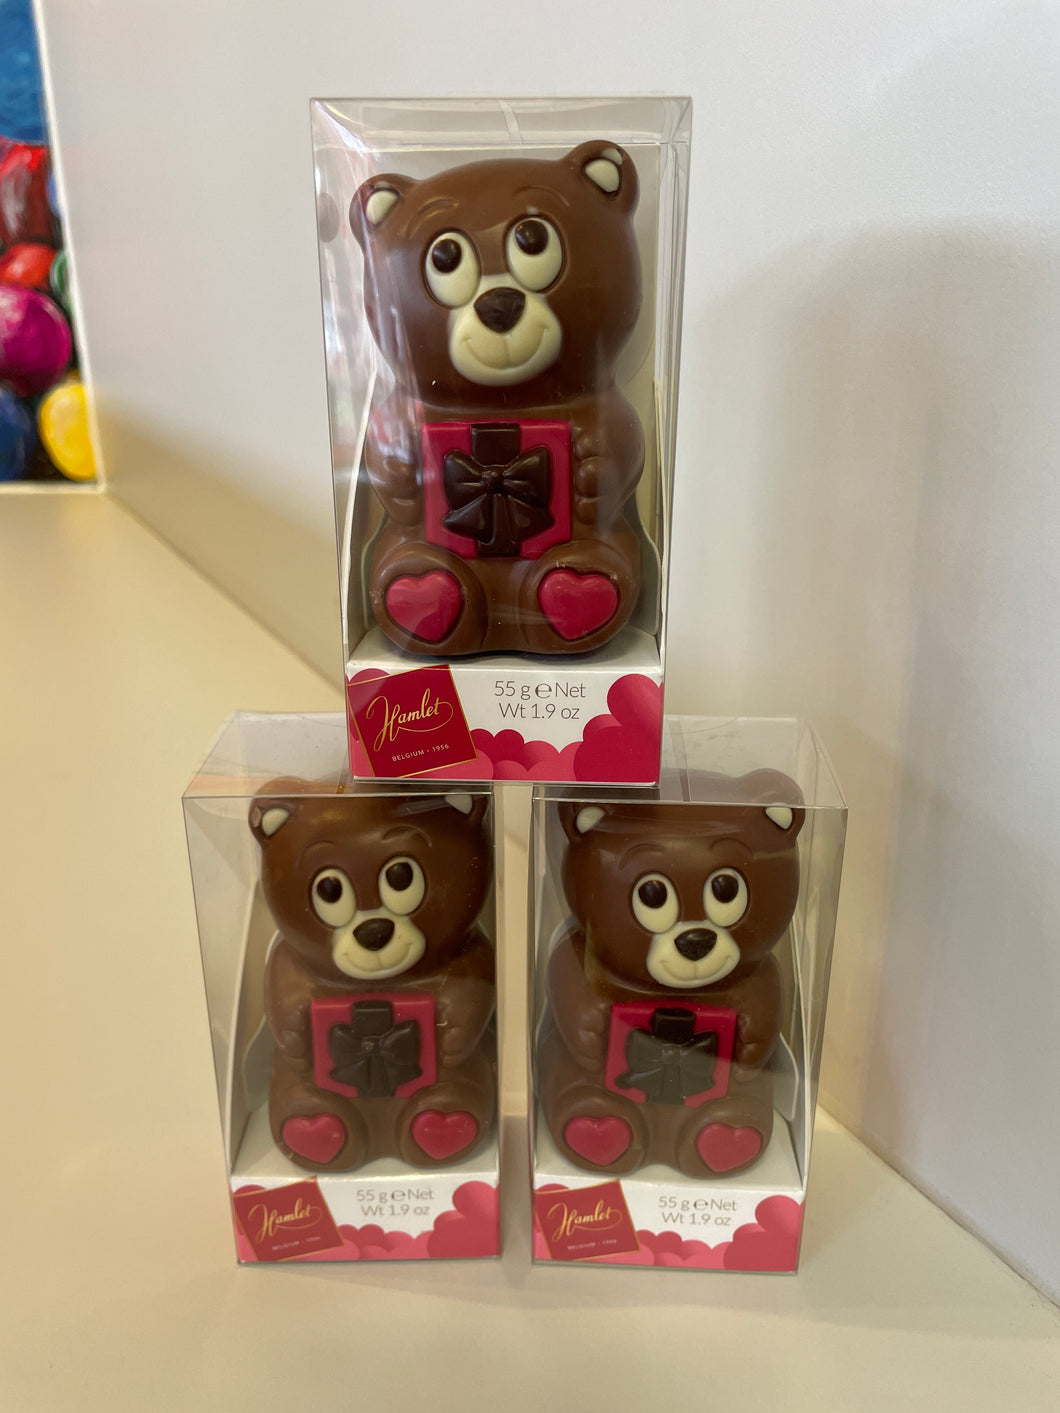 Belgian Chocolate Bear Figure.